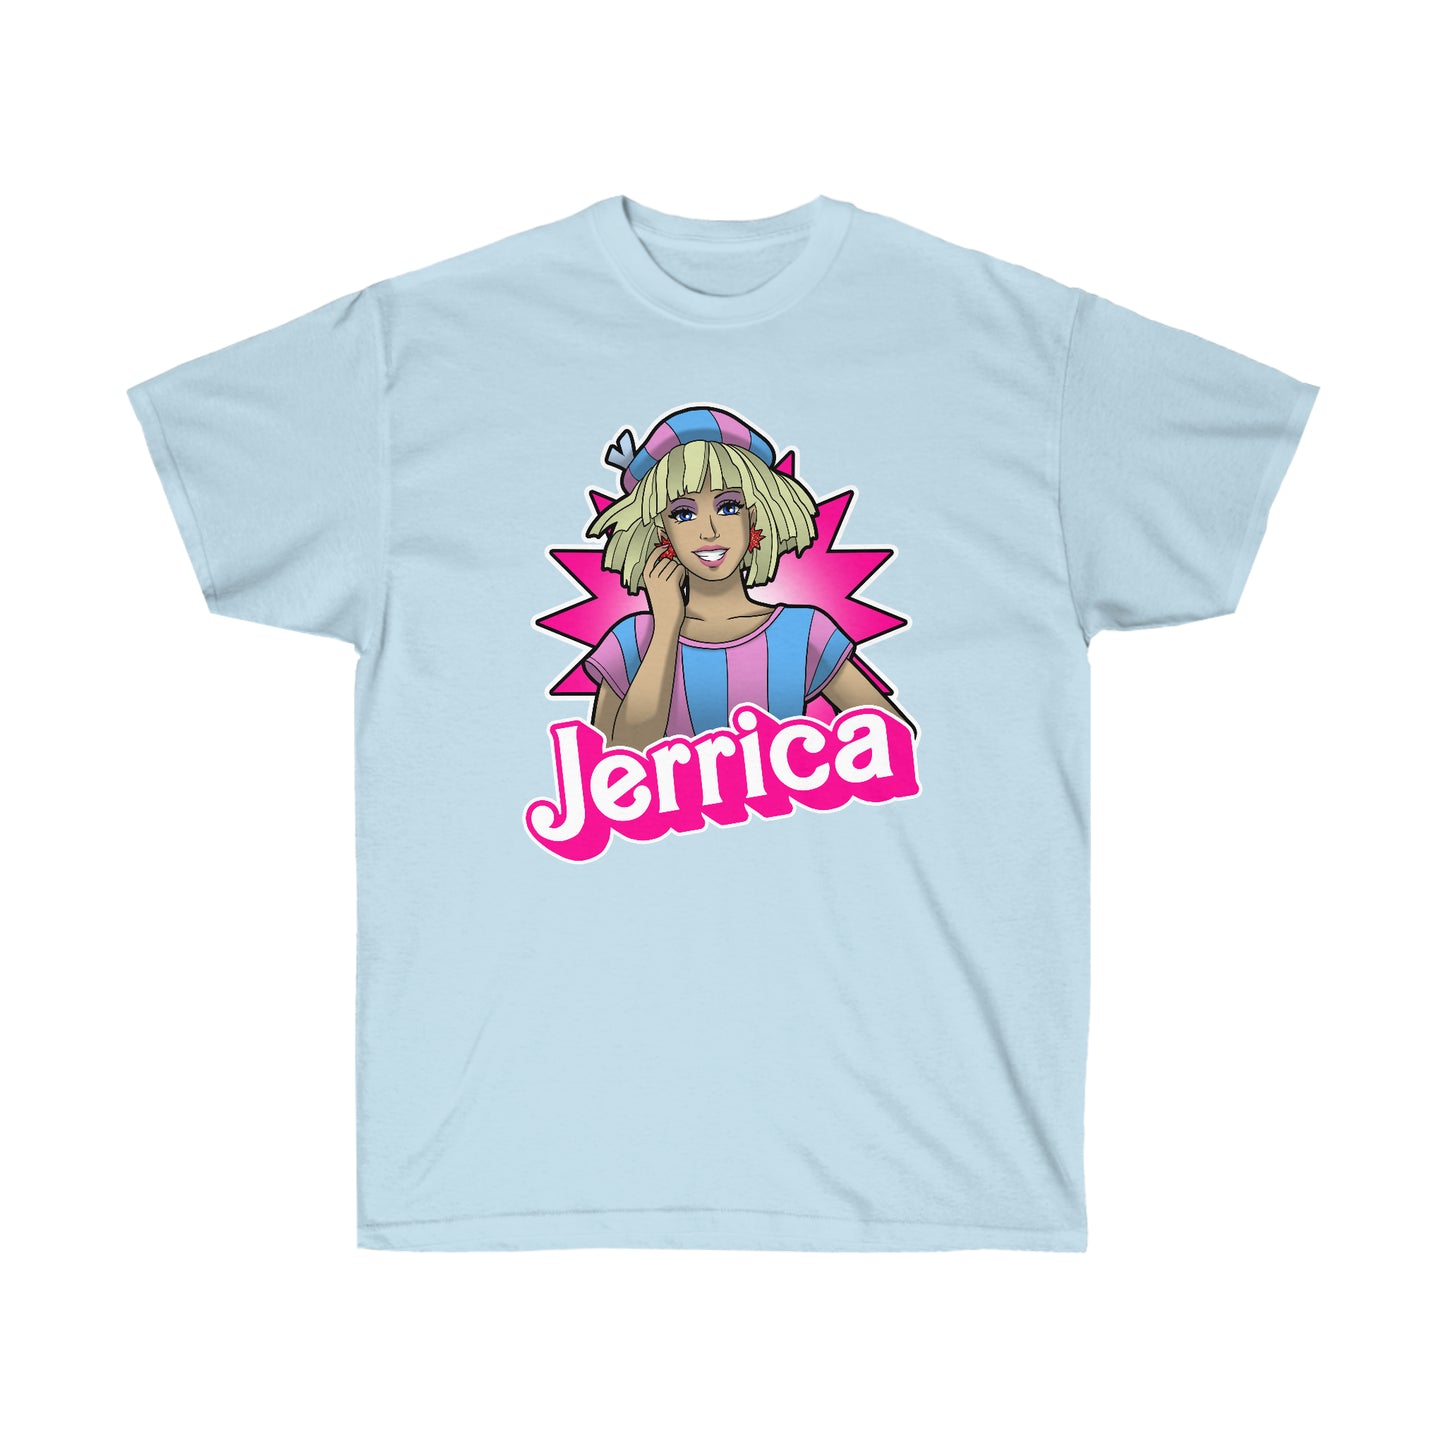 Jerrica Doll t-shirt